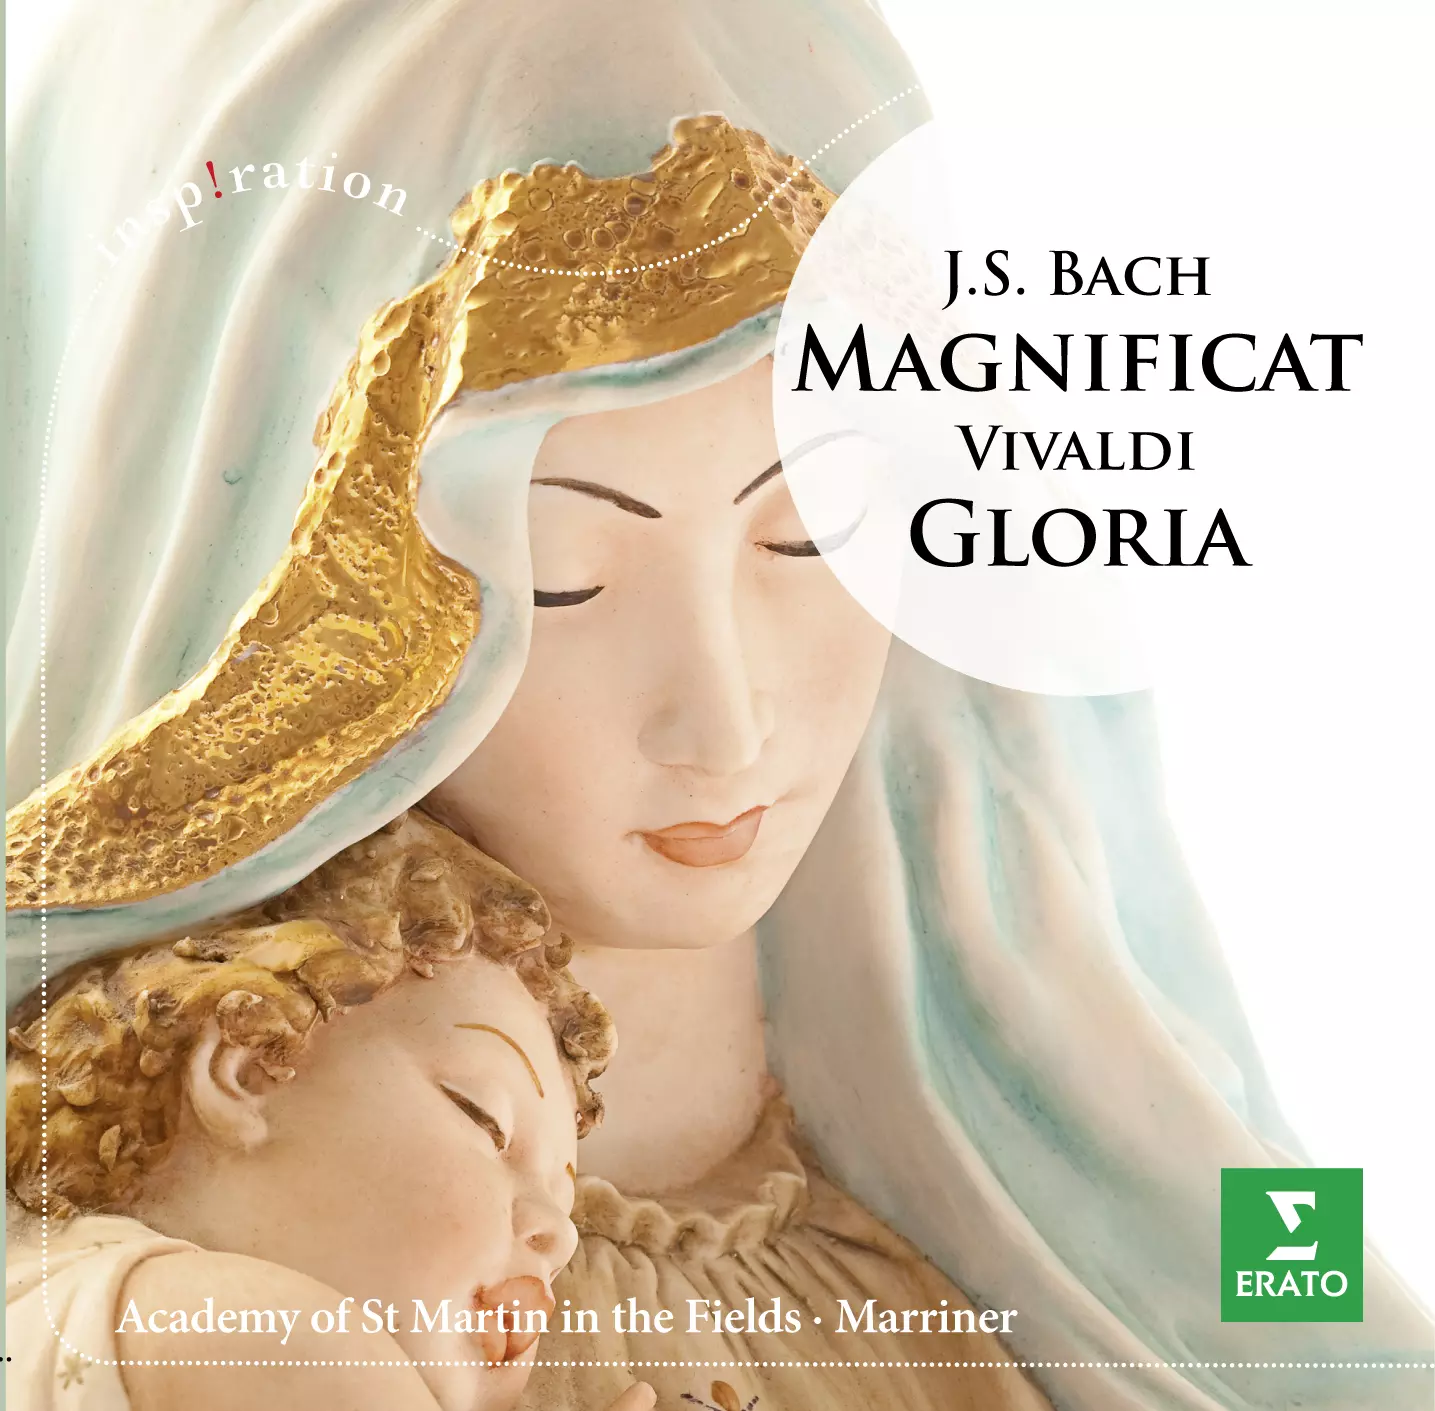 Bach: Magnificat / Vivaldi: Gloria